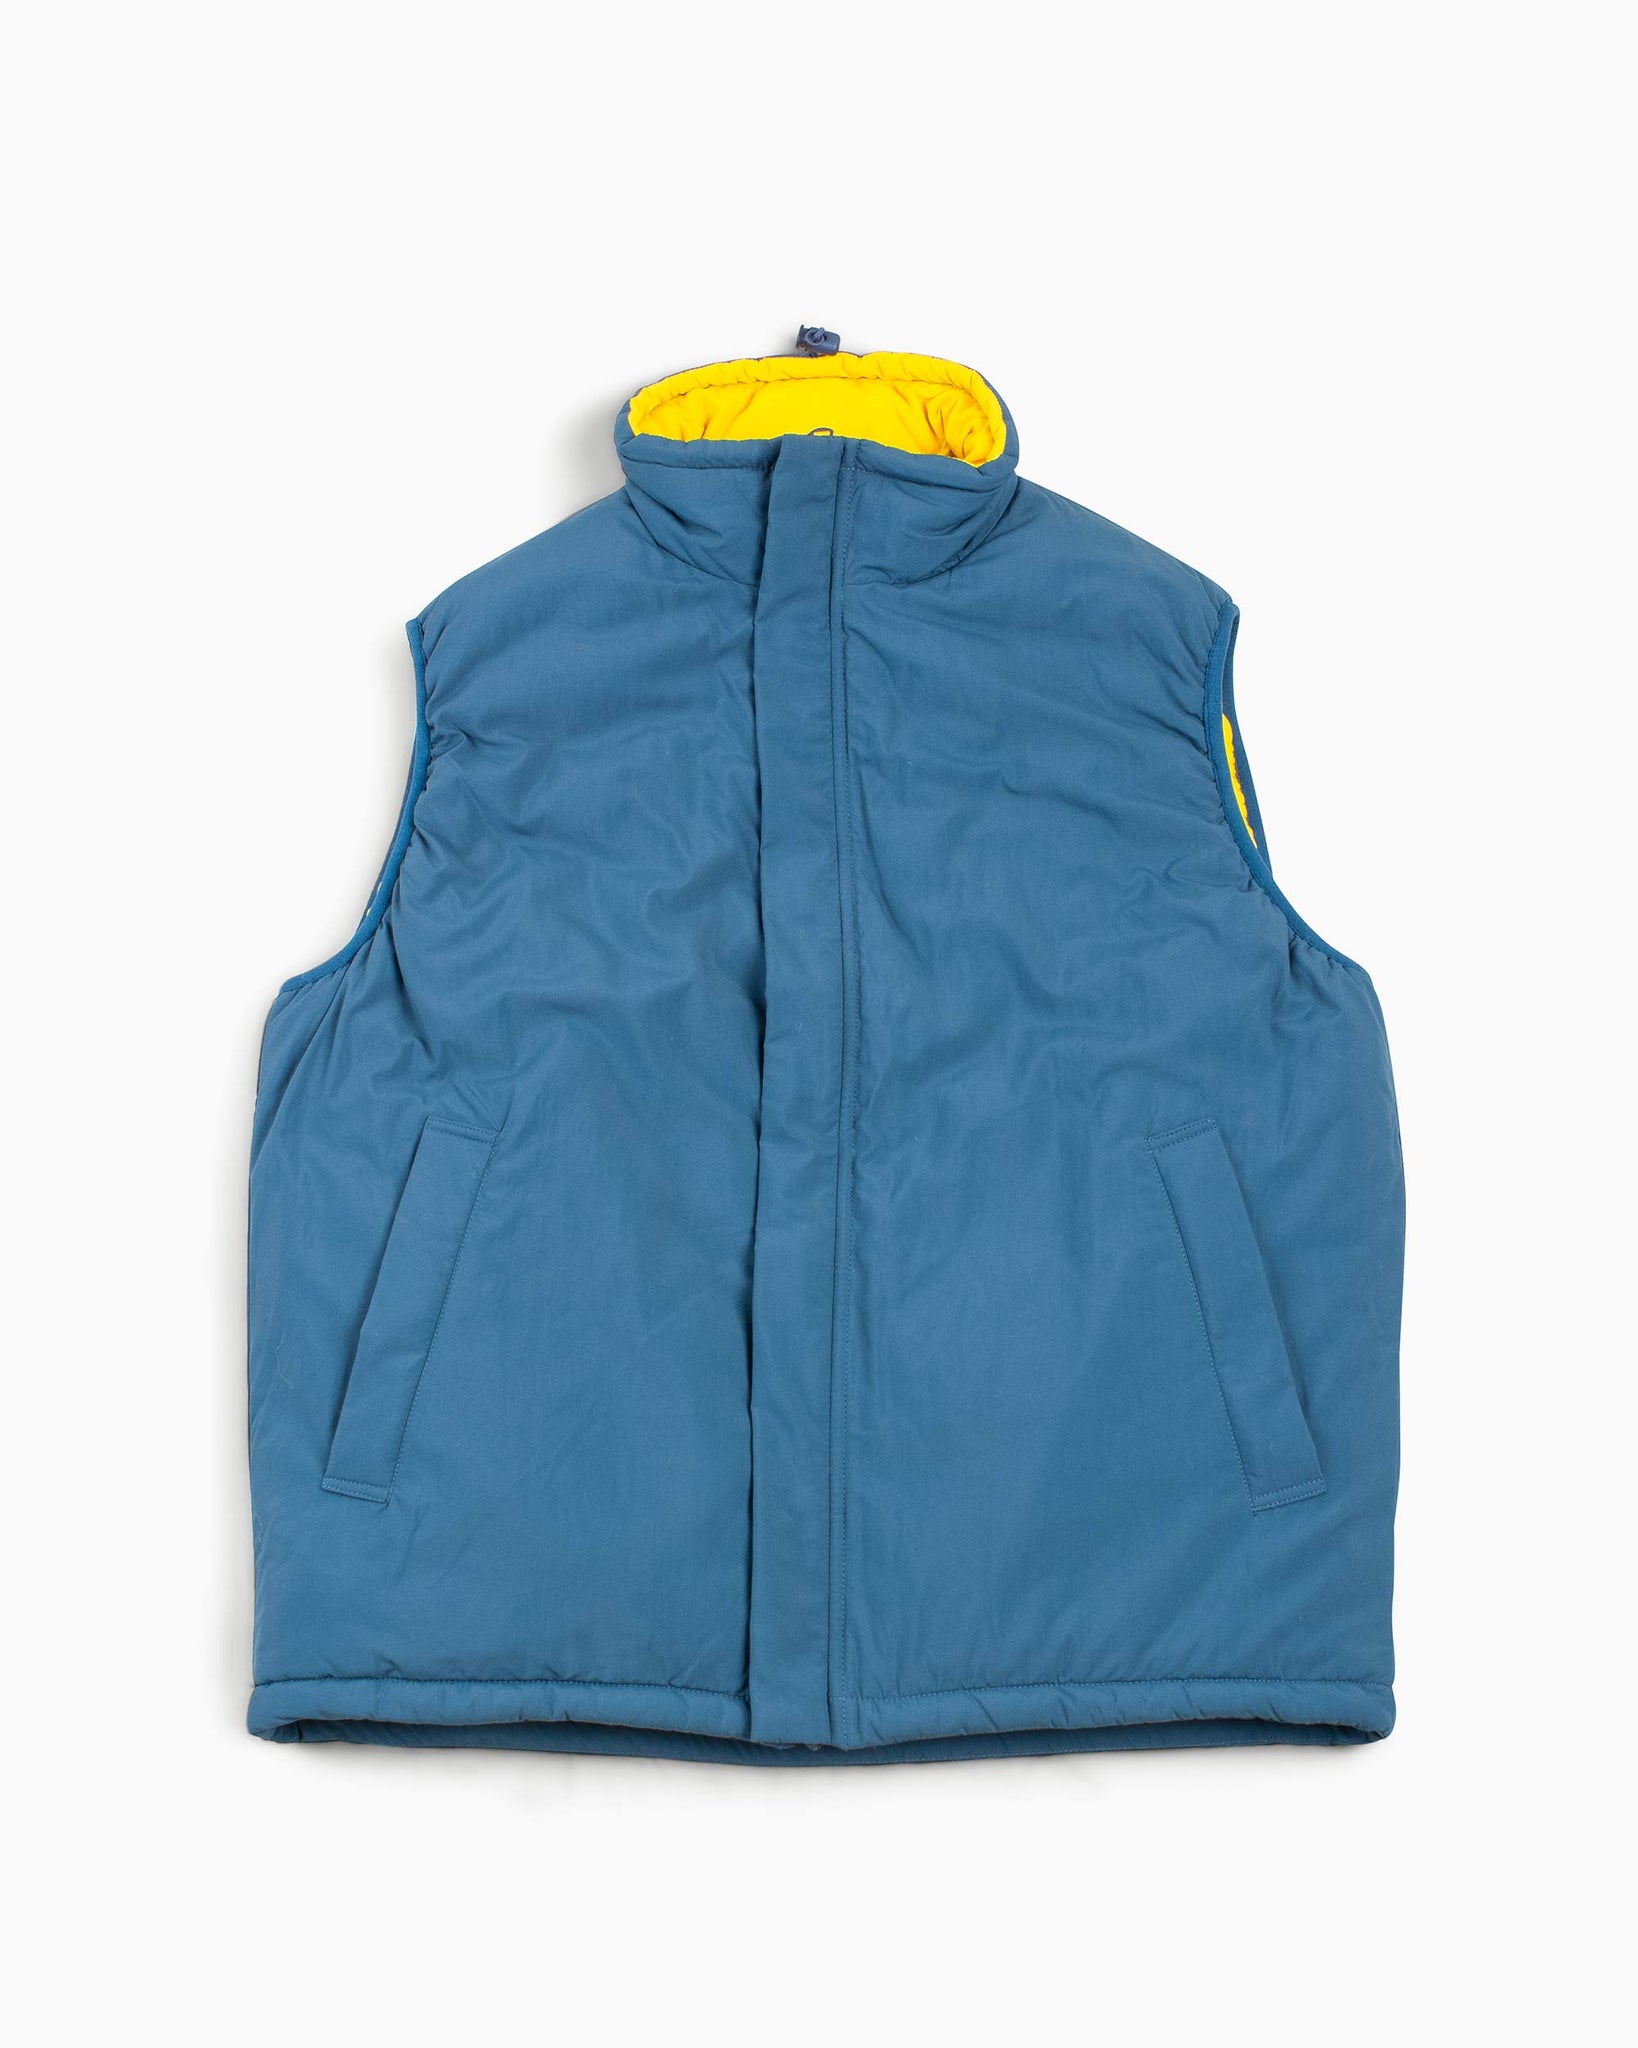 Beams Plus MIL Puff Vest CORDURA® Nylon Blue